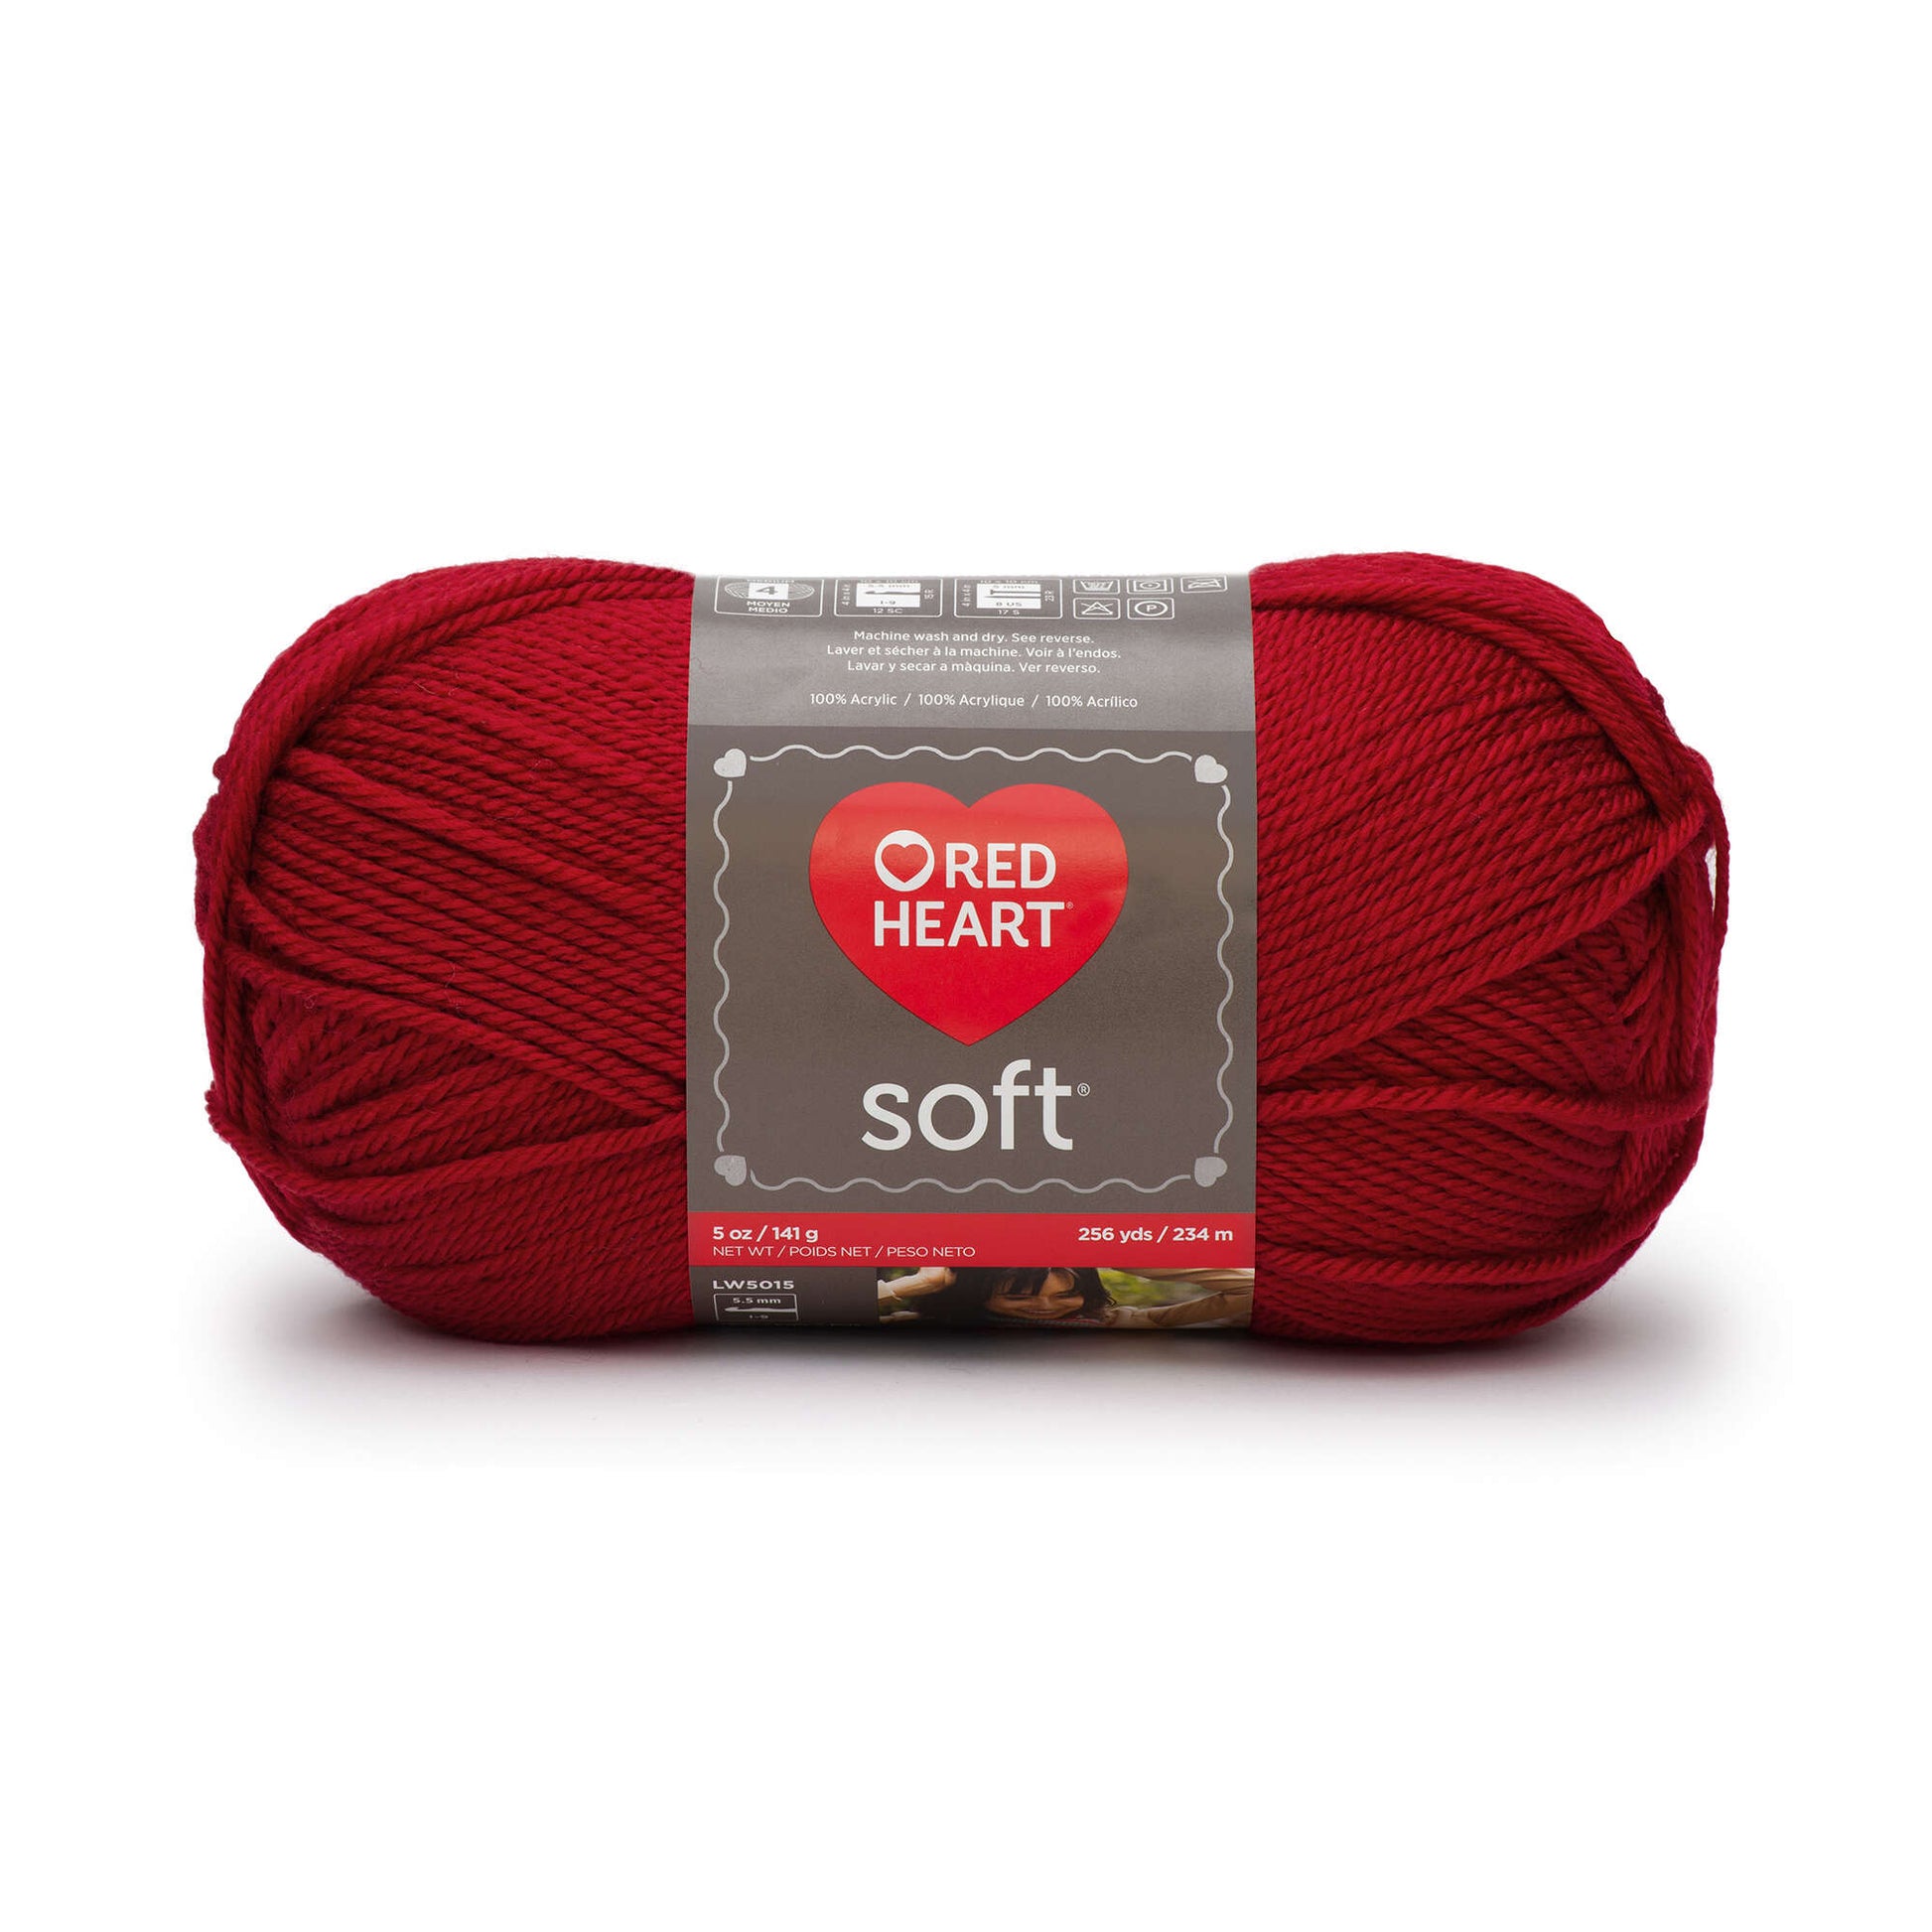 Red Heart Soft Yarn